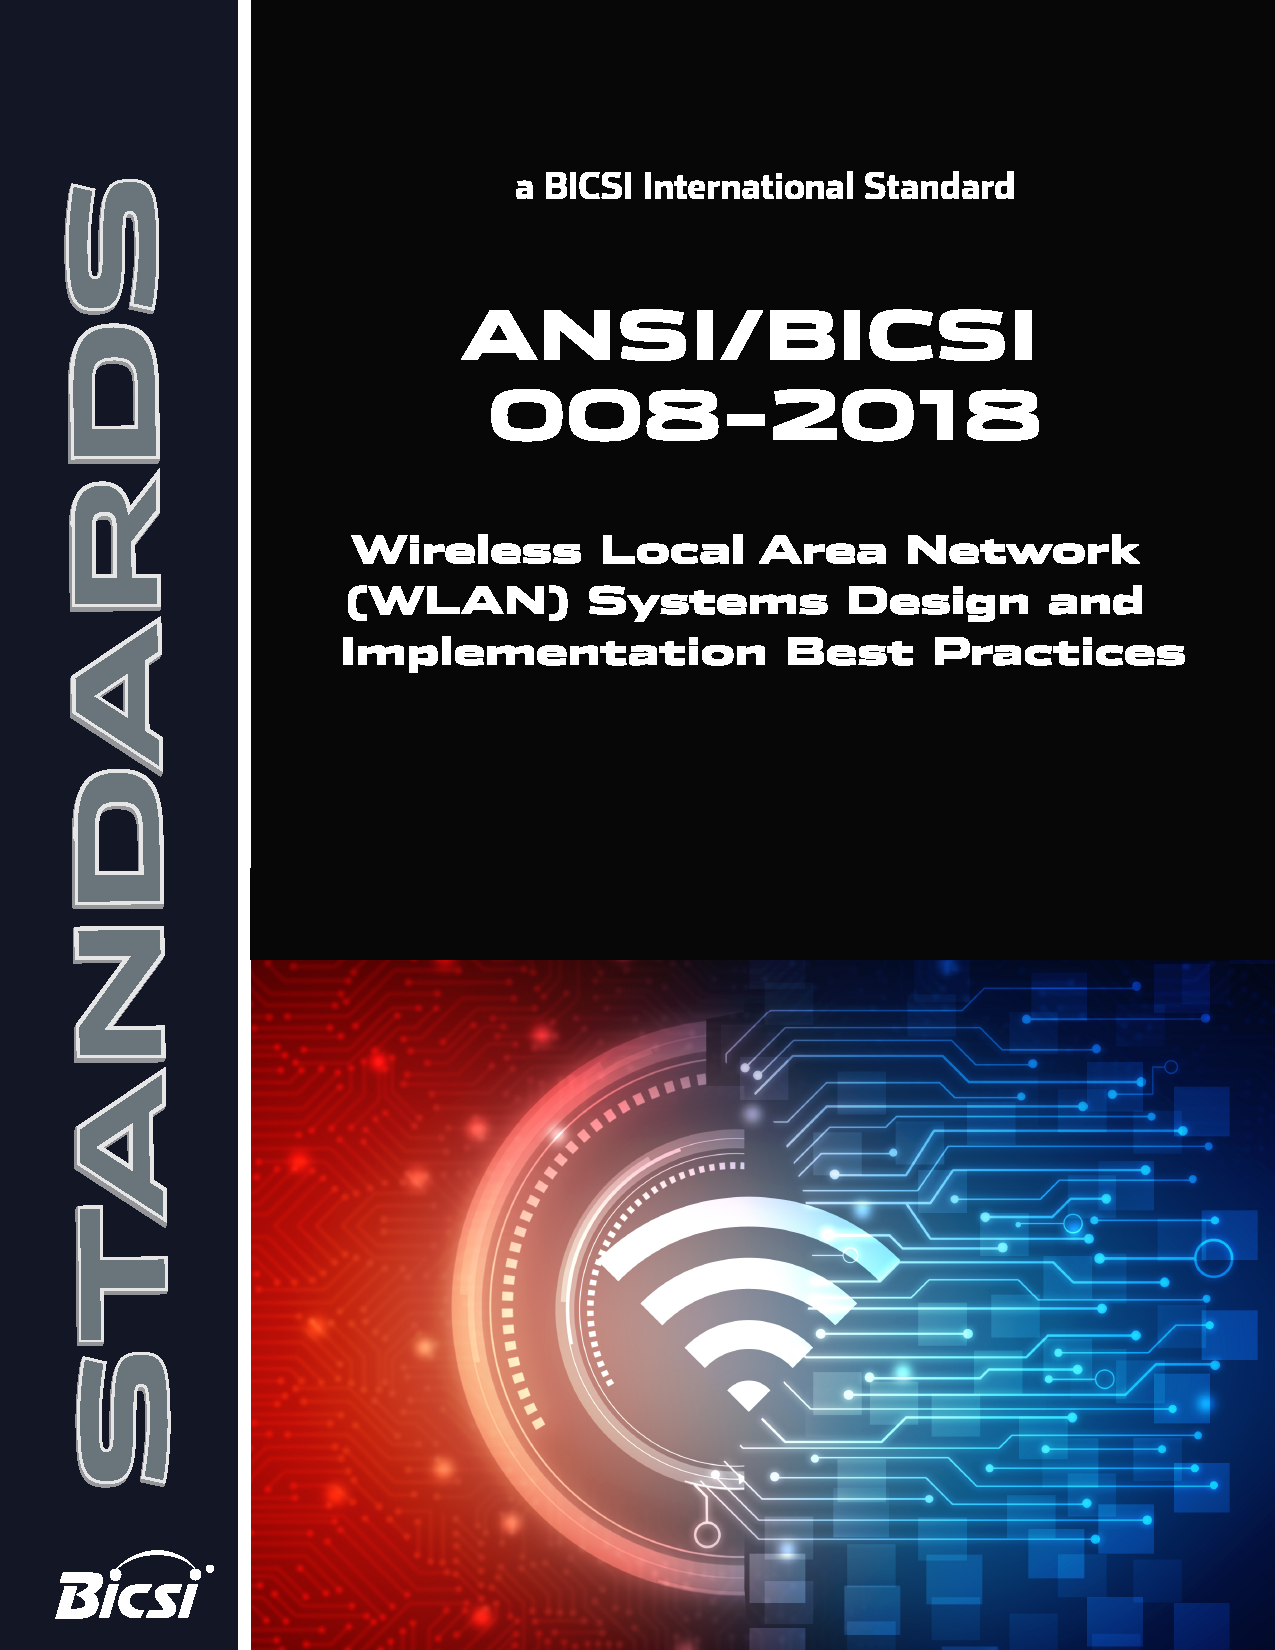 ANSI/BICSI 008-2018